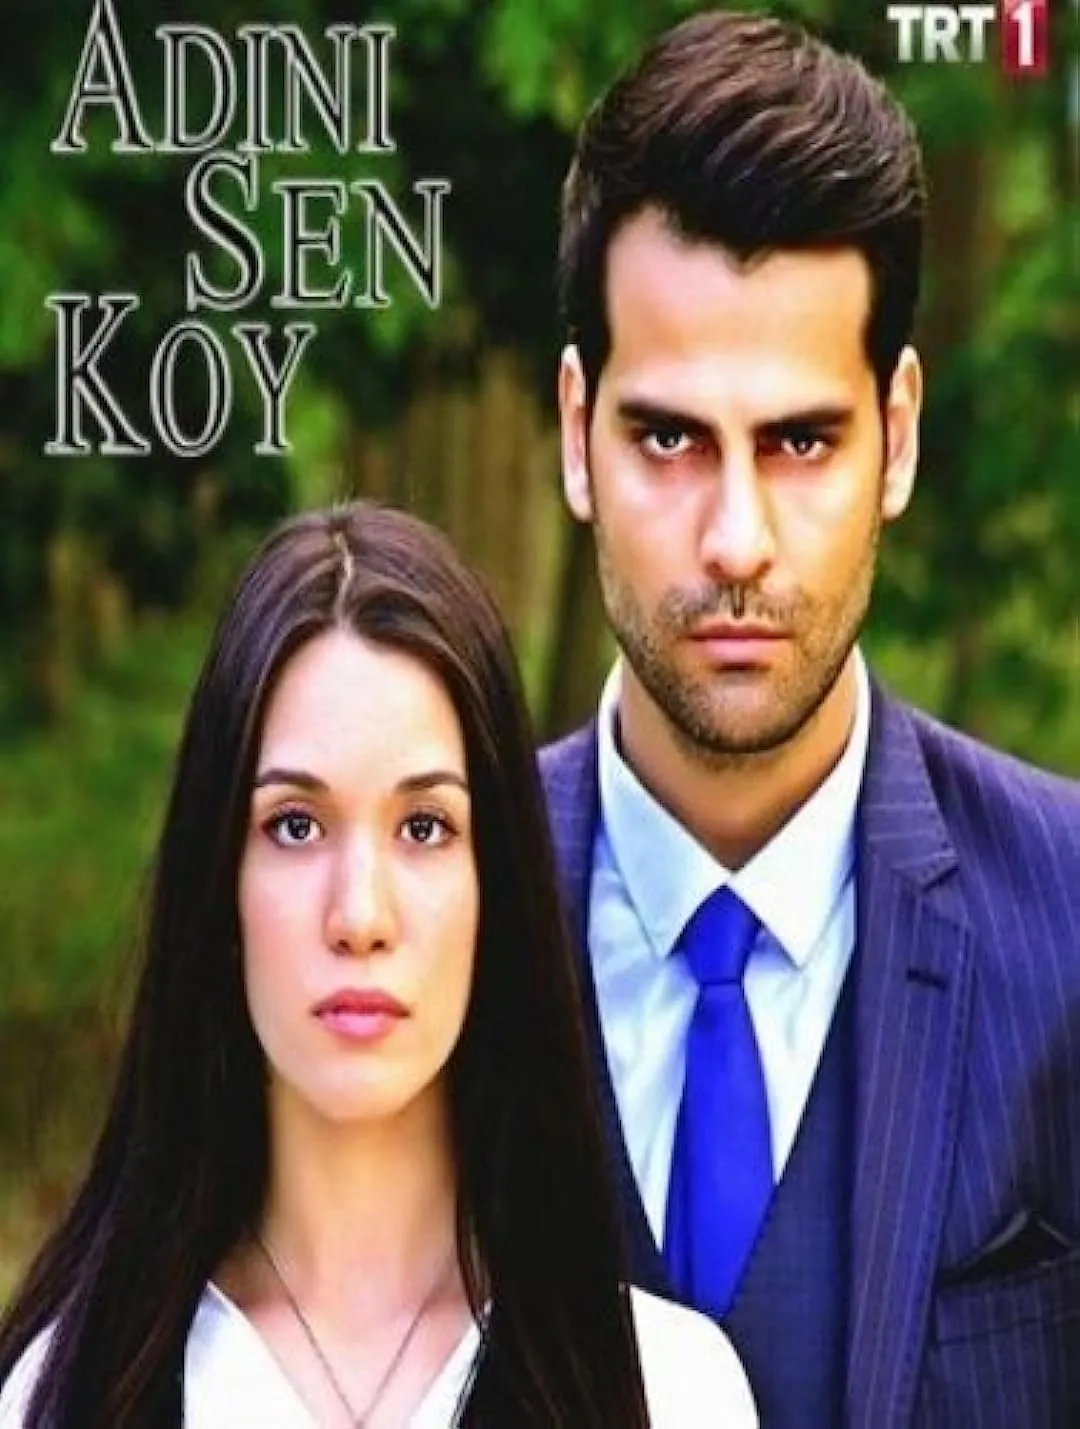 Adini Sen Koy online subtitrat in romana